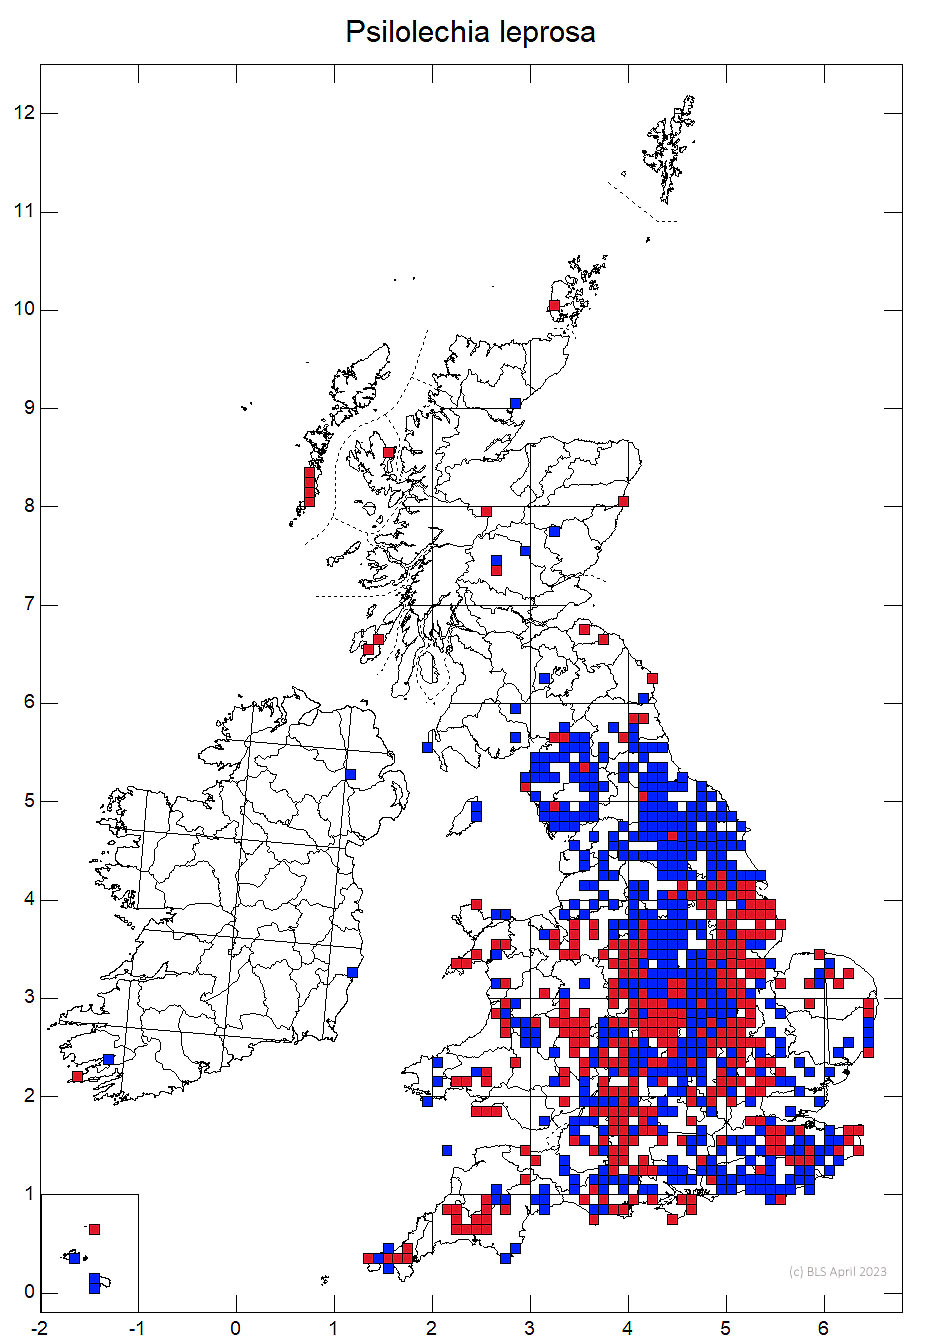 Psilolechia leprosa 10km sq distribution map